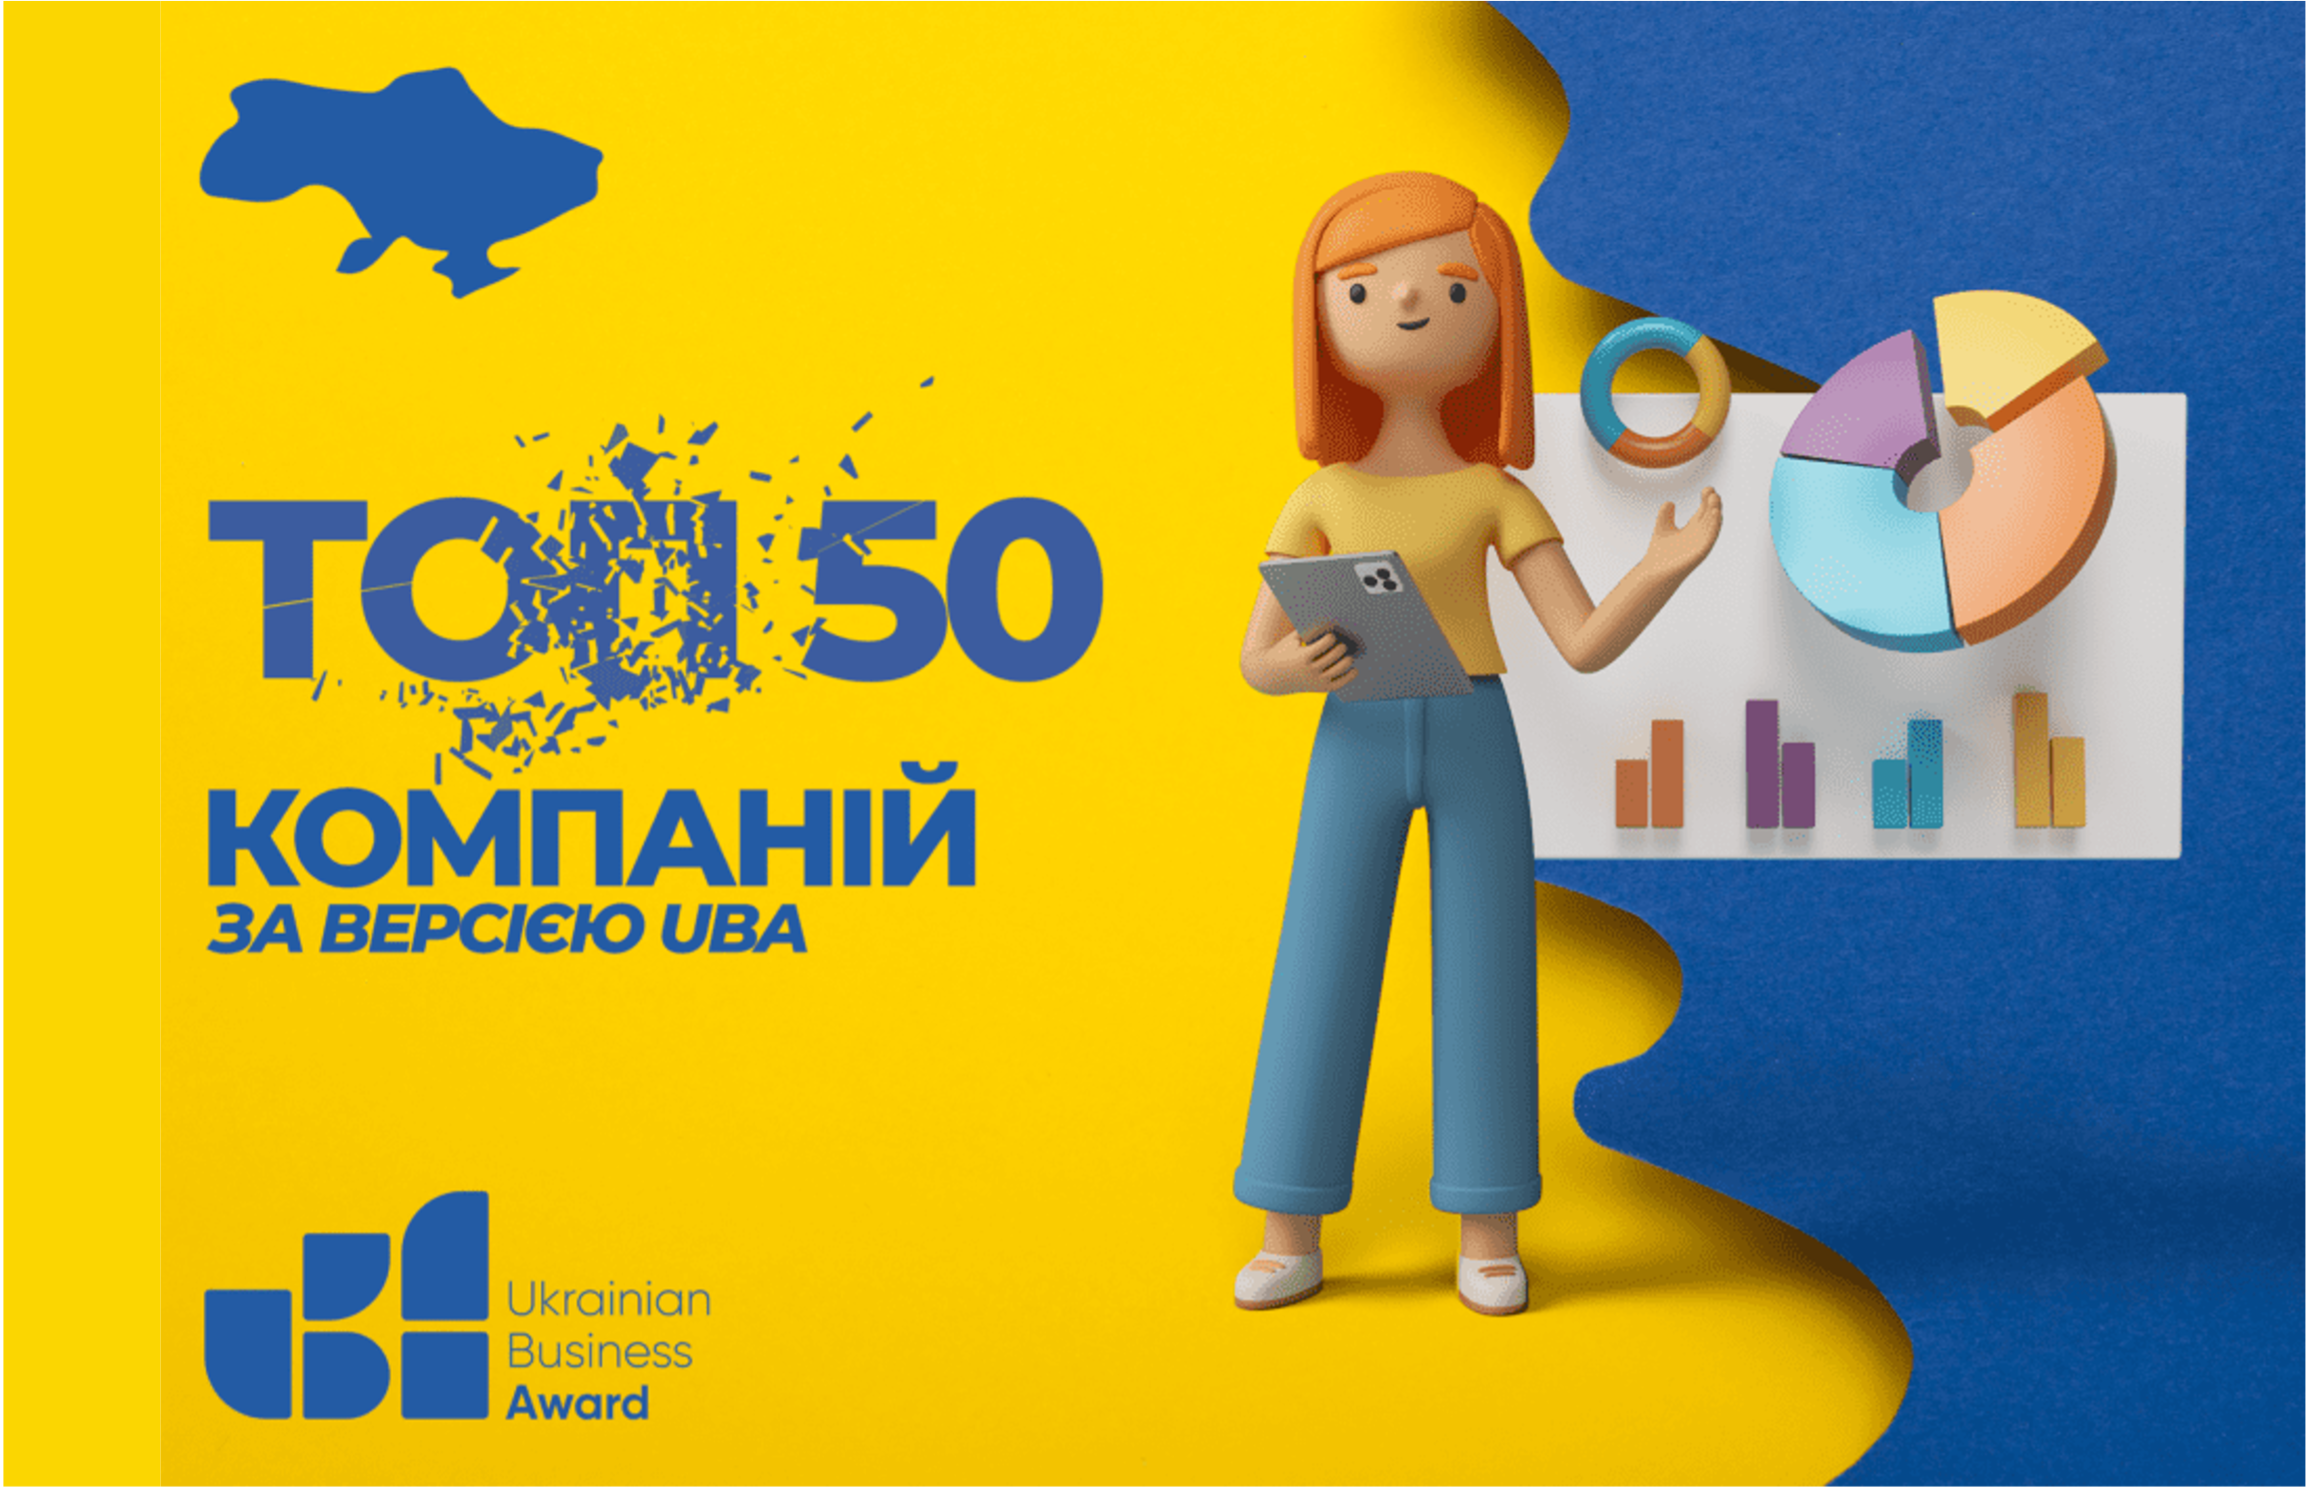 Sunagro Ukraine LLC  is  listed among TOP-50 best companies operating in Ukraine, according to the Ukrainian Business Award.